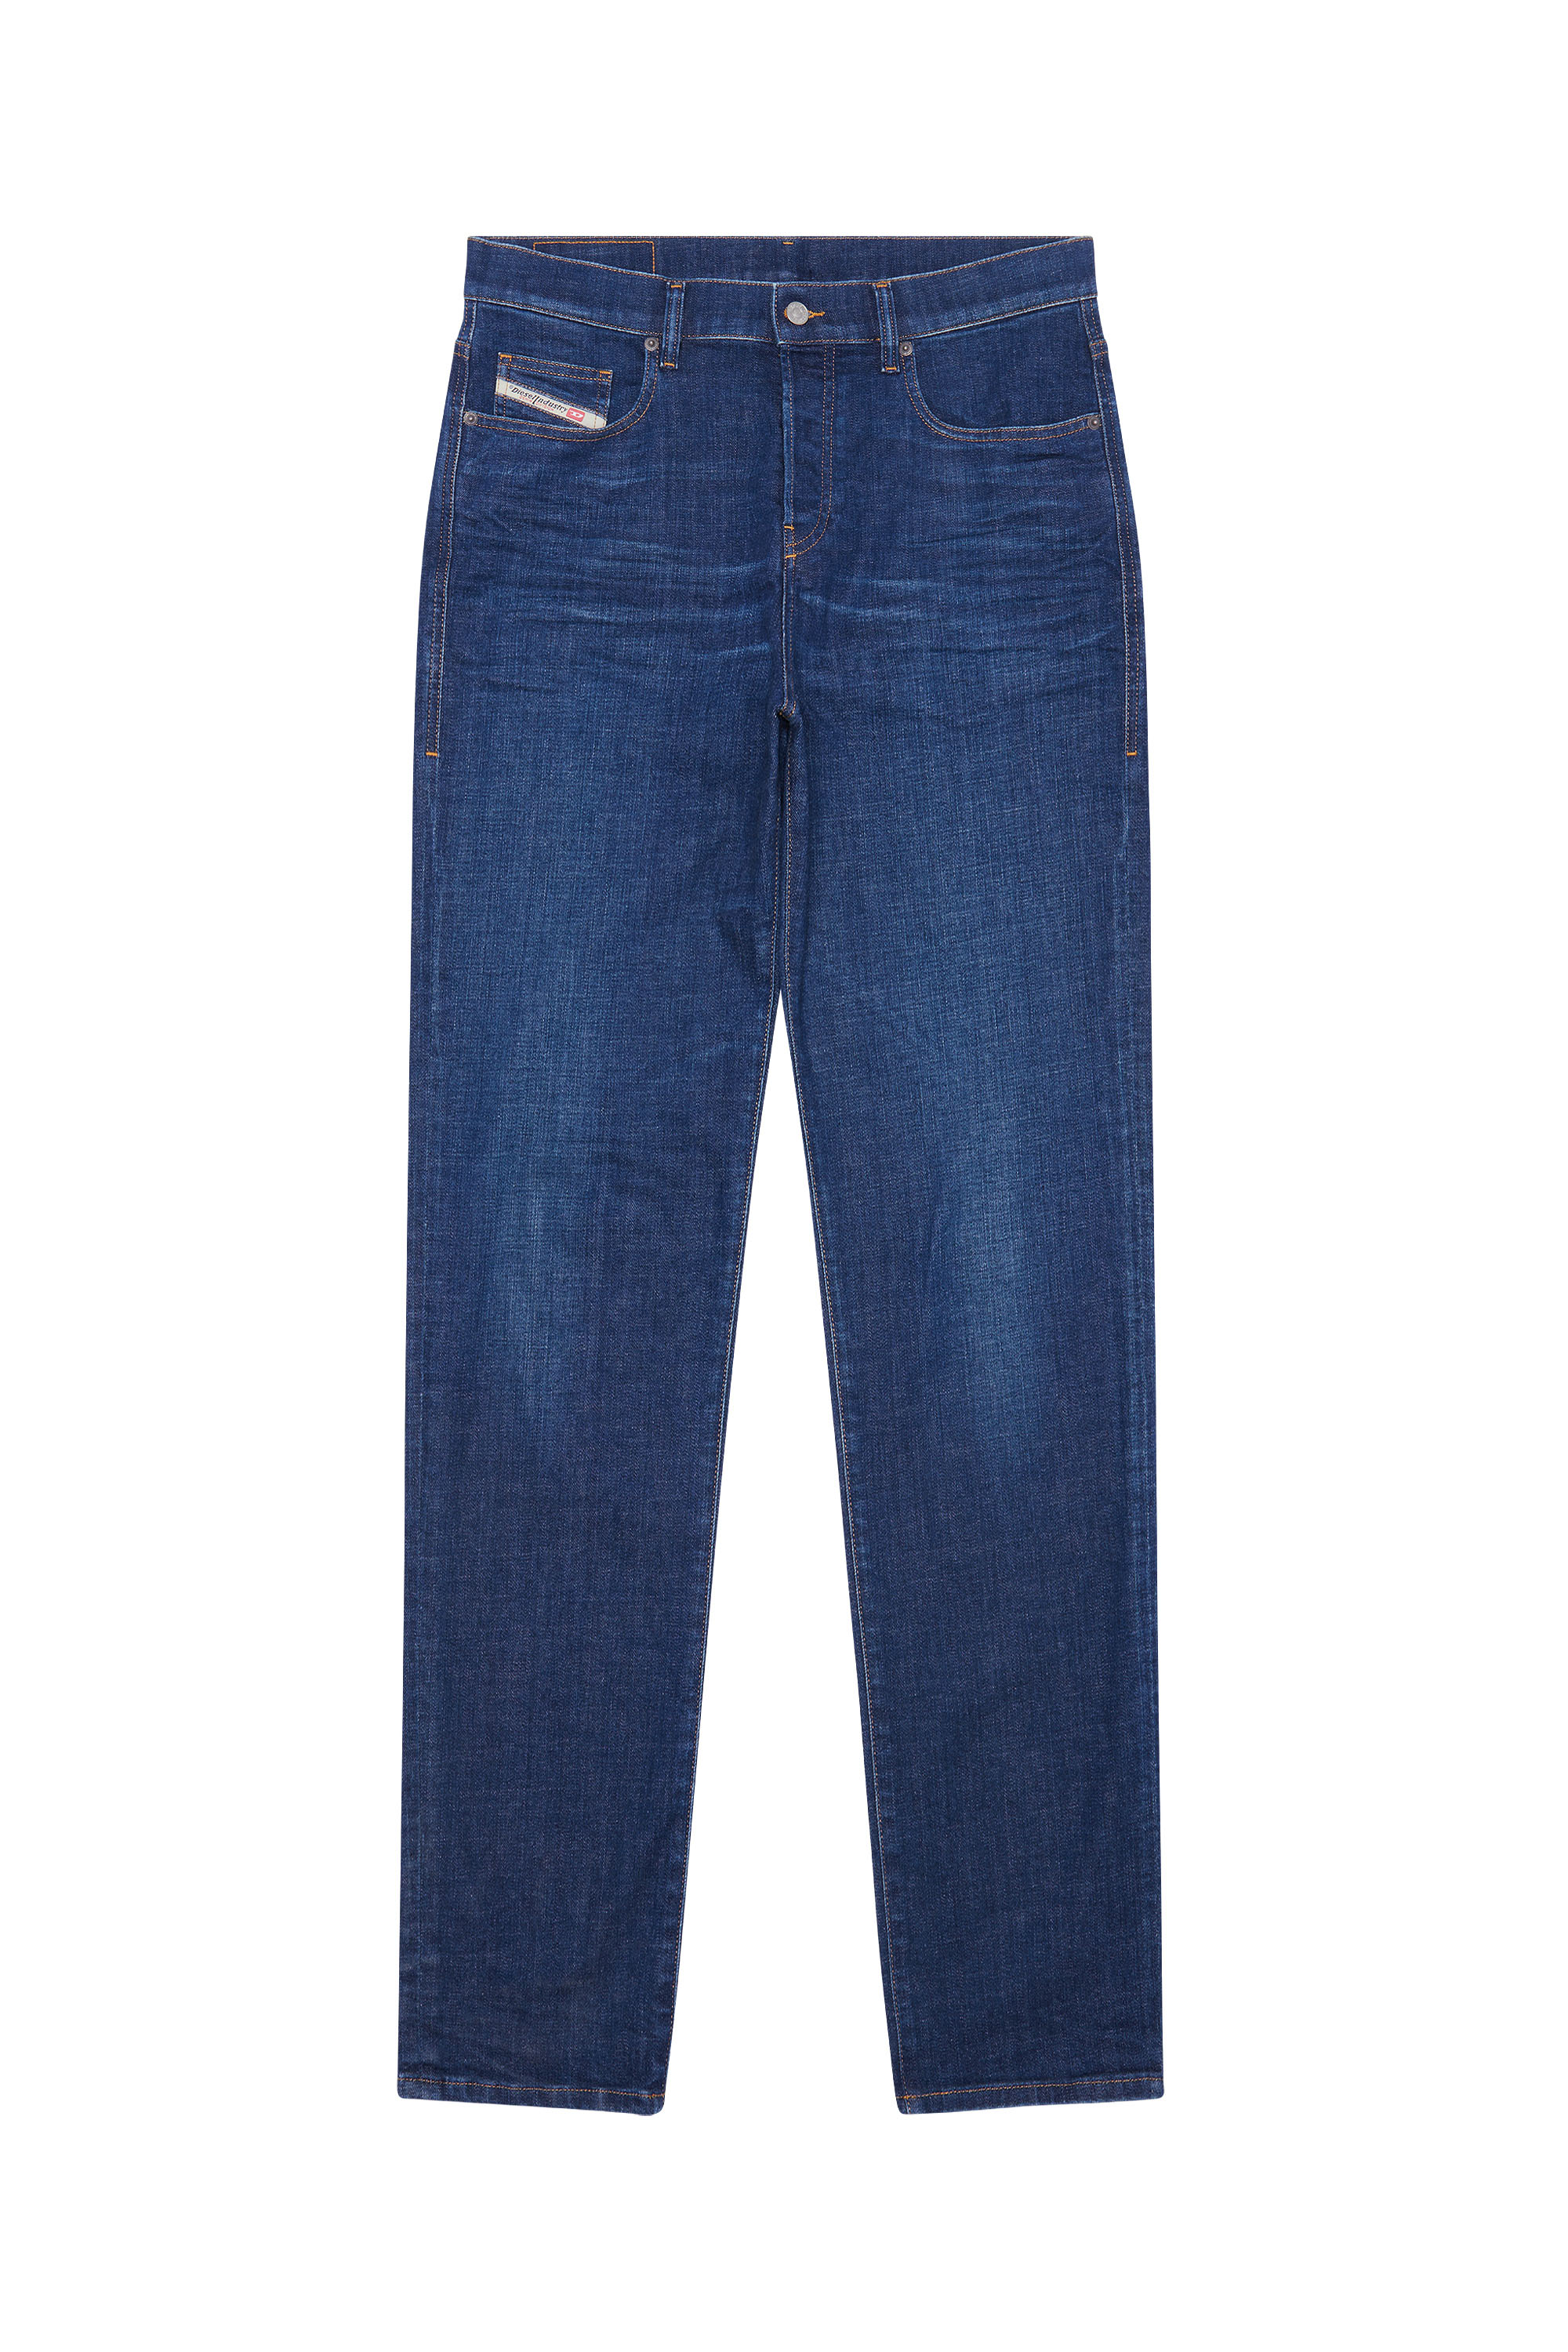 2020 D-VIKER 09D45 Straight Jeans, Dark Blue - Jeans